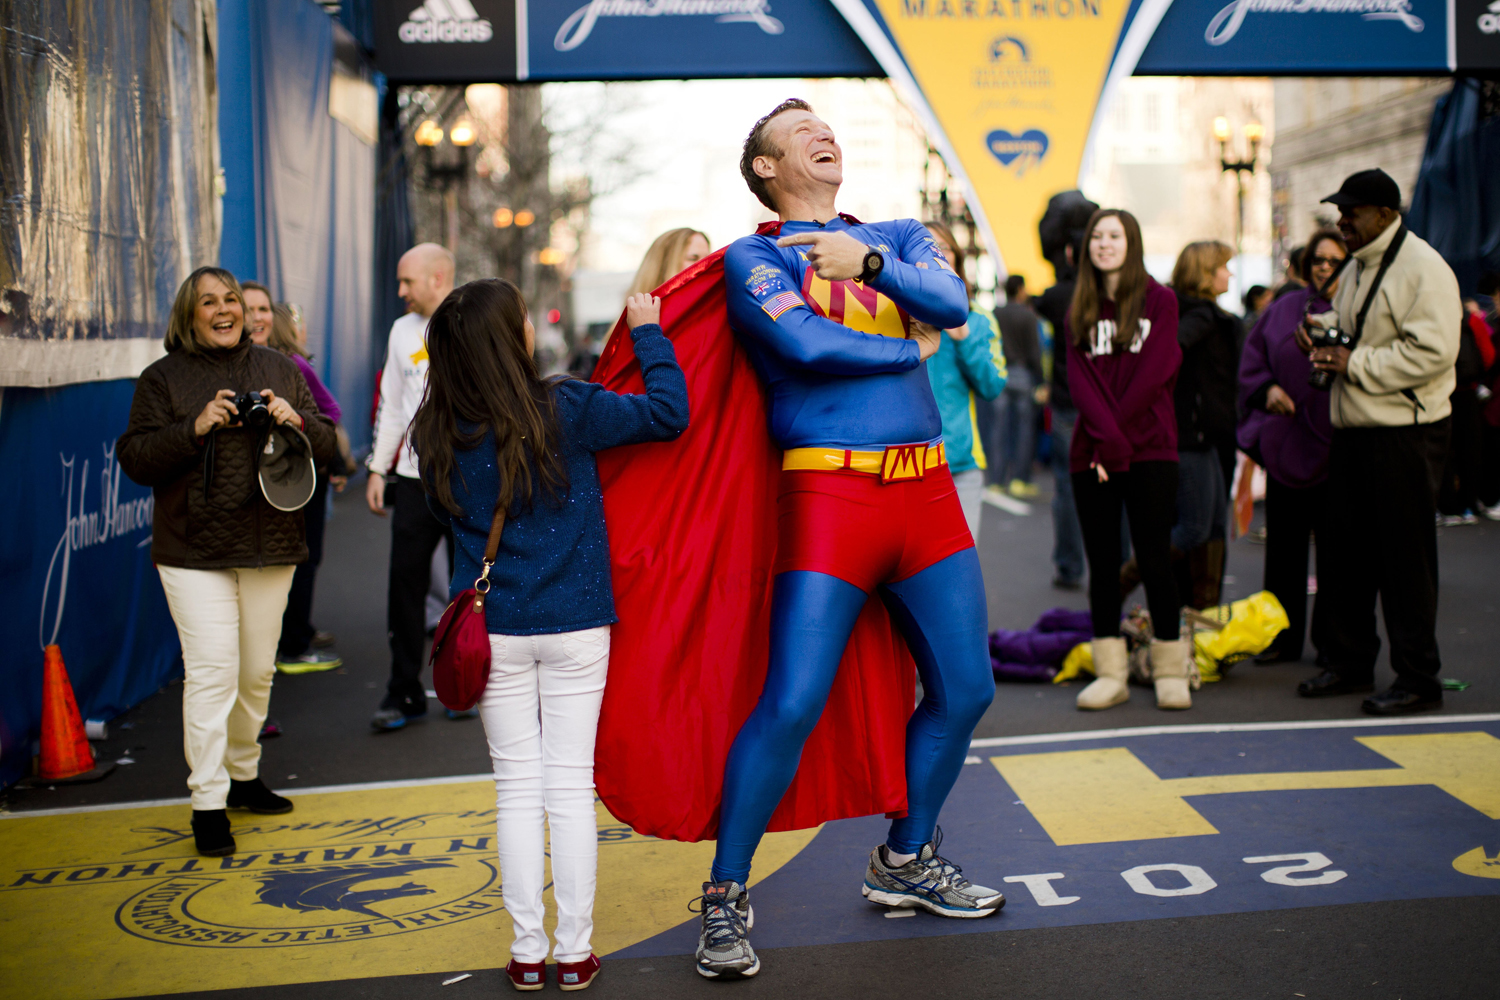 Trent Morrow of Sydney, Australia, also know as "Marathon Man" laughs as Andrea Olivo of Venezuela tugs on his cape as she has her photo made ahead of Monday's 118th Boston Marathon, Sunday, April 20, 2014. (Mosa'ab Elshamy)